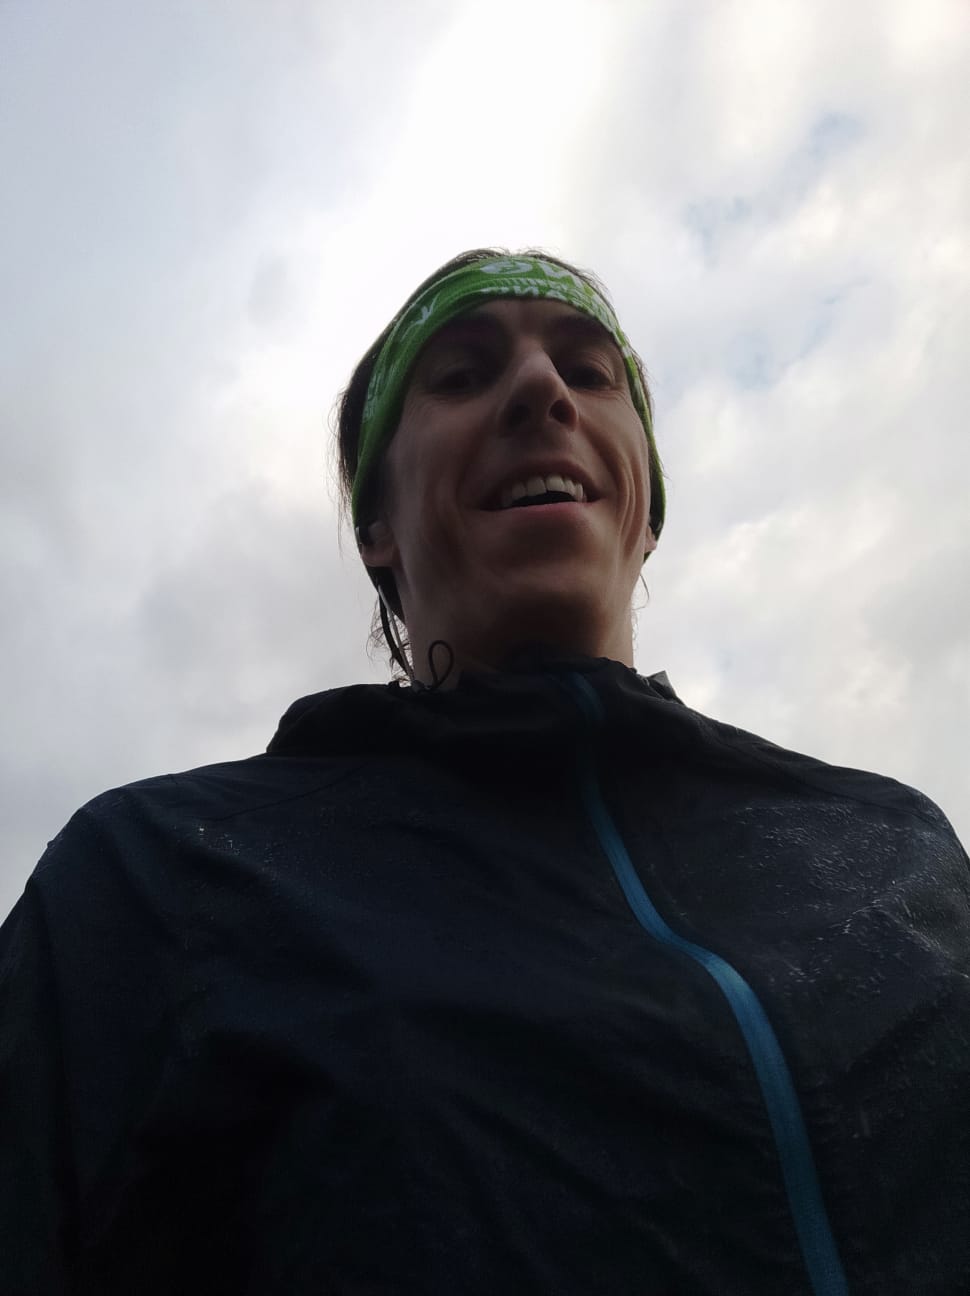 Peters Doppelmarathon - Challenge in der Coronakrise